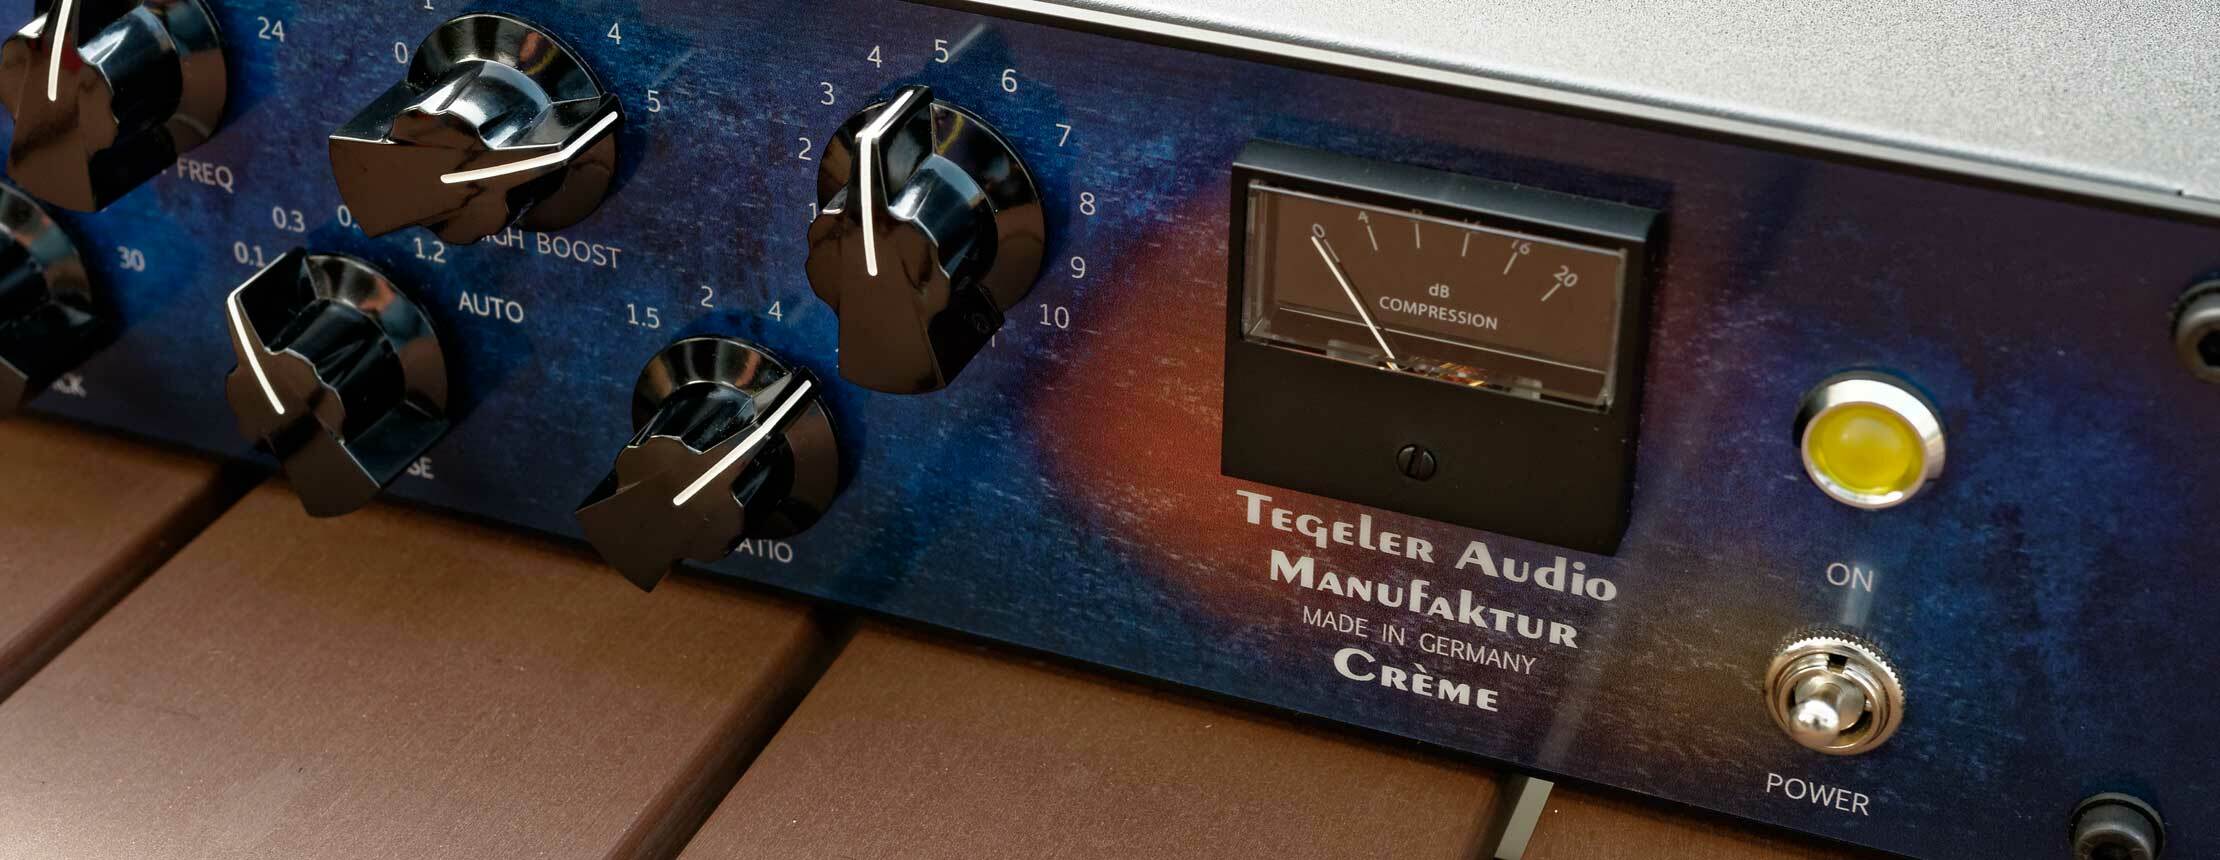 Tegeler Audio Manufaktur CrÈme - Kompressor Limiter Gate - Main picture